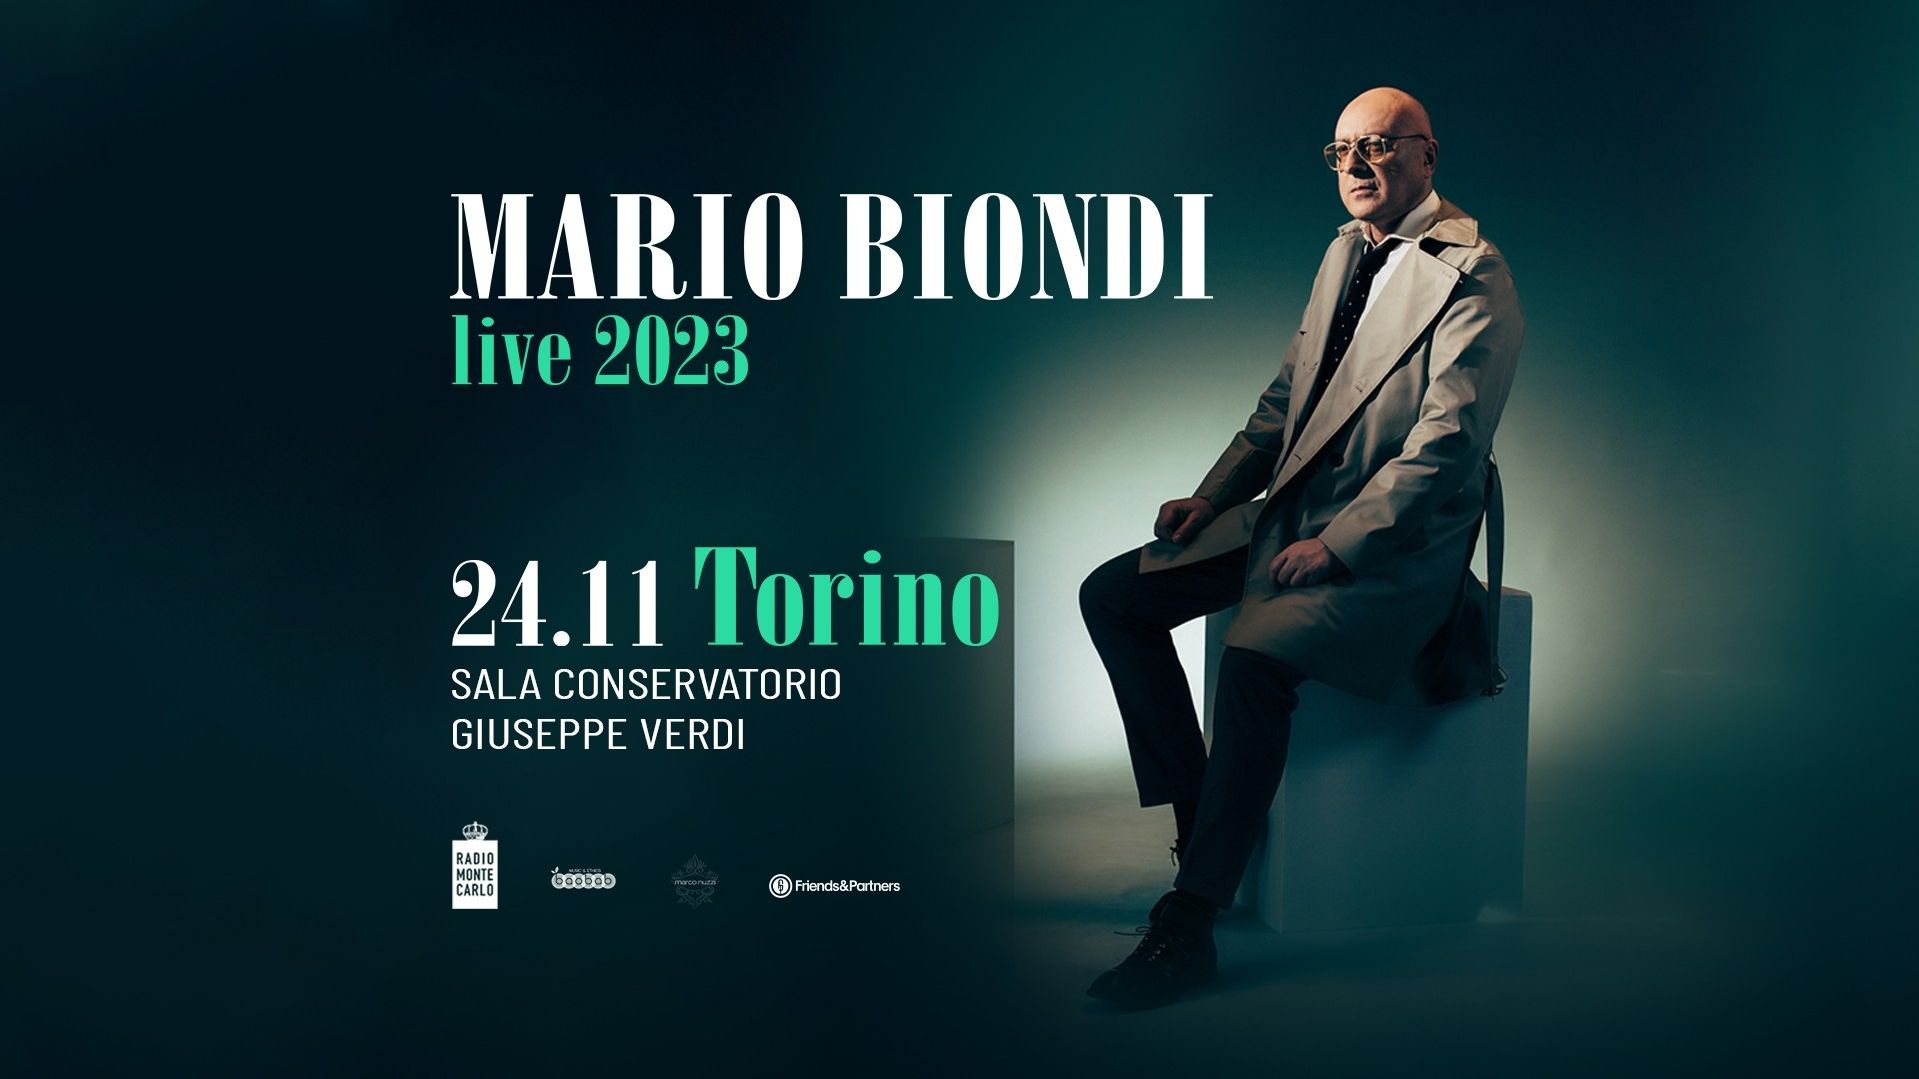 Mario Biondi "Tour Live 2023"